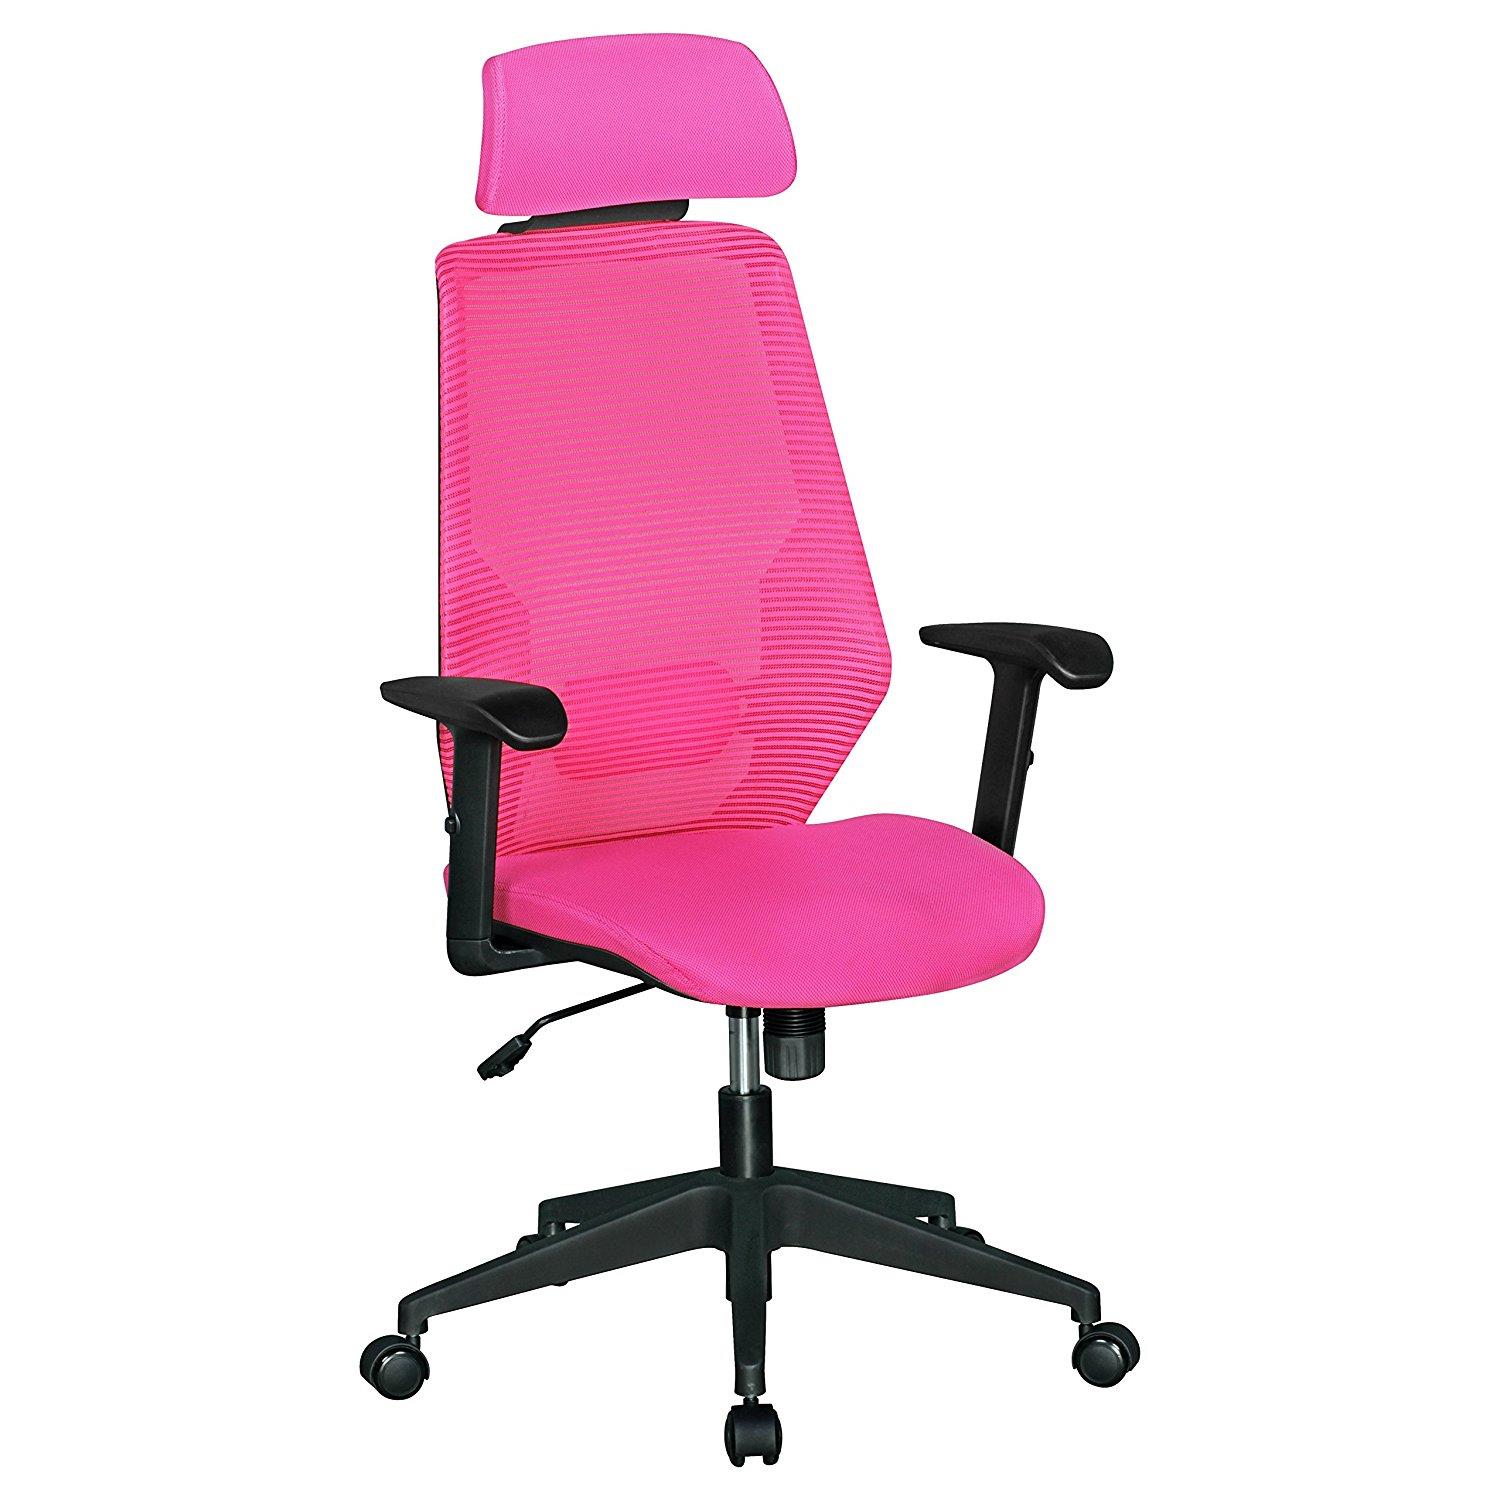 Ergonomischer Bürostuhl ERIKA, Lordosenstütze, verstellbare Armlehnen, atmungsaktiver Netzbezug, Farbe Pink